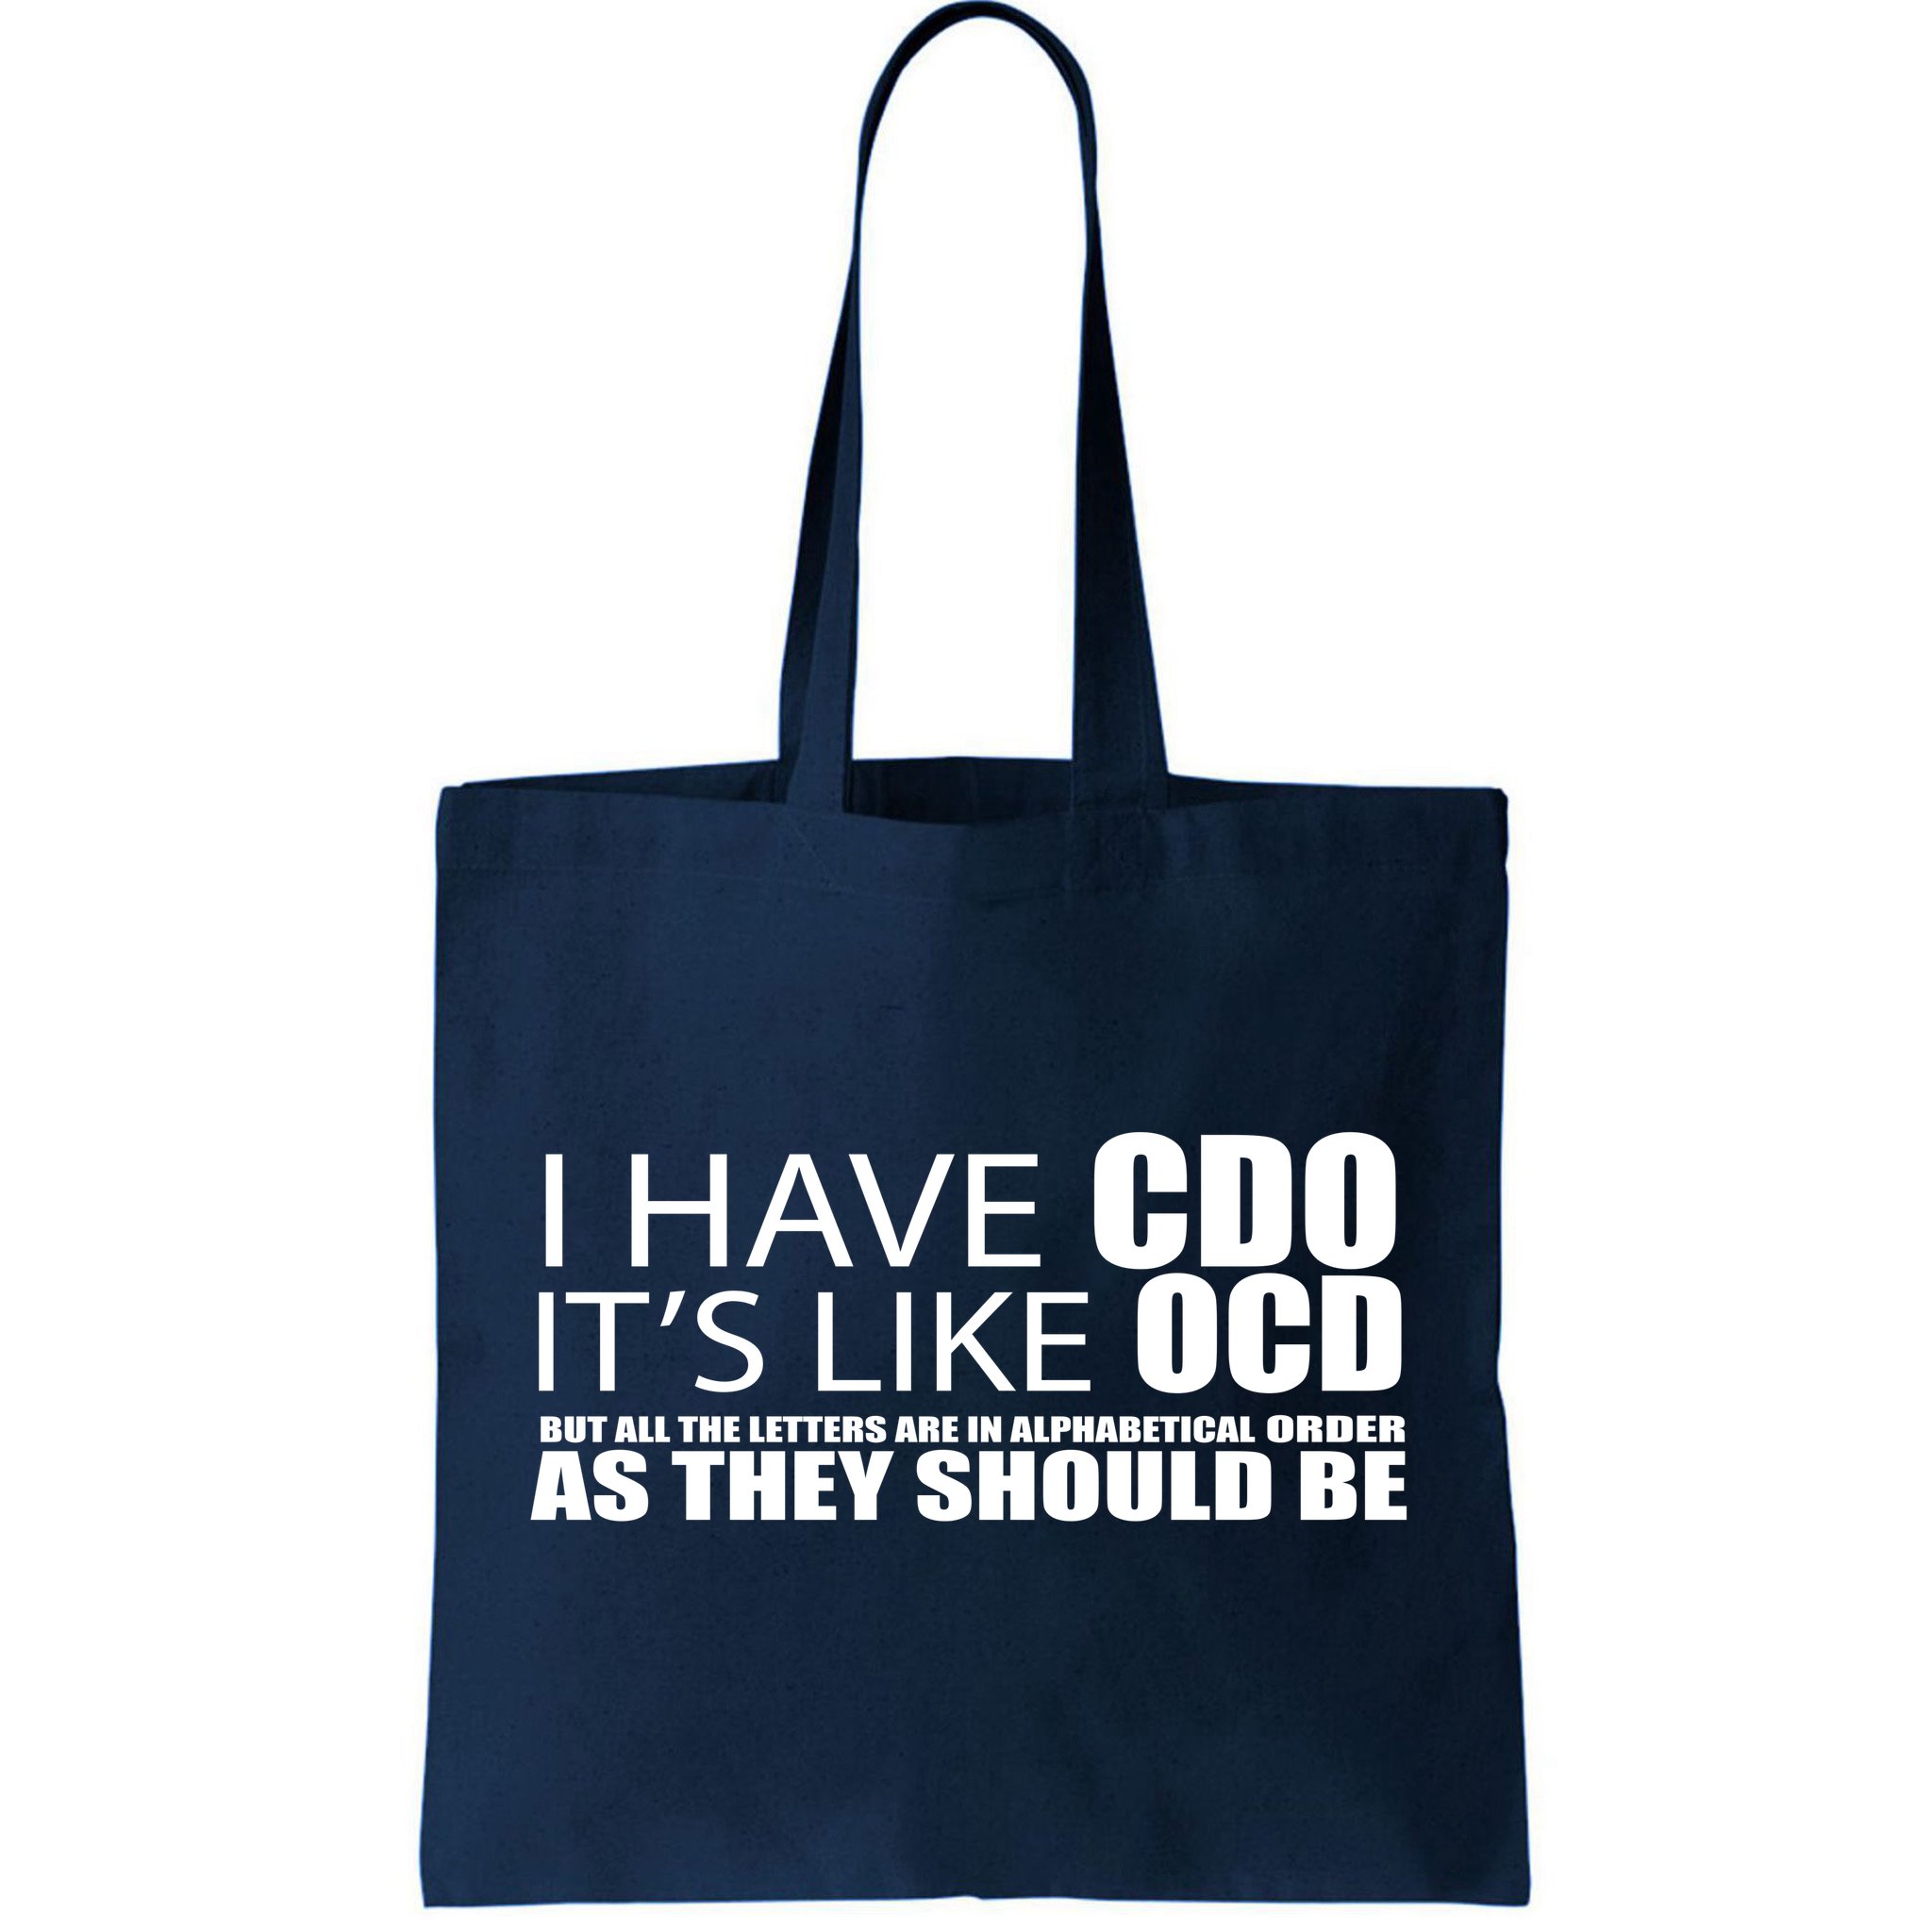 Shopper Tote Bag Funny Joke Slogan Totes Gift Bags It's Like OCD. I Have CDO 